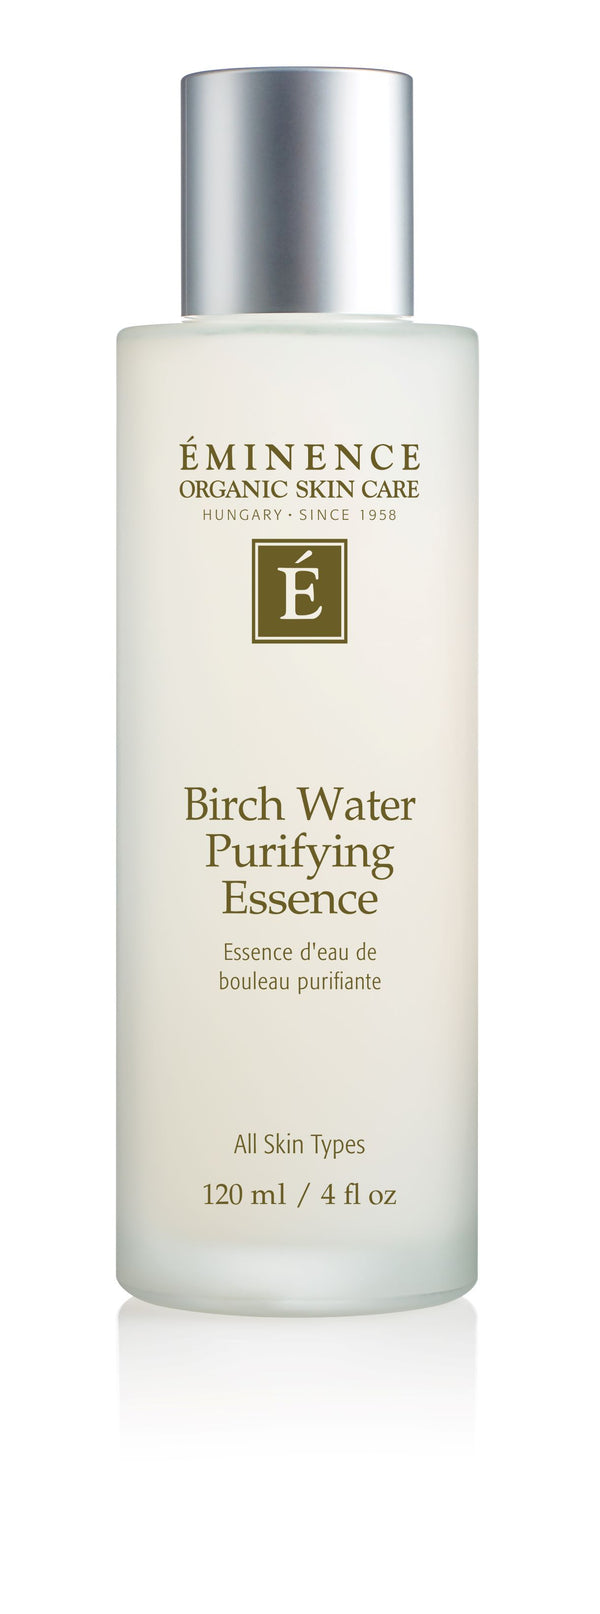 Birch Water Purifying Essence